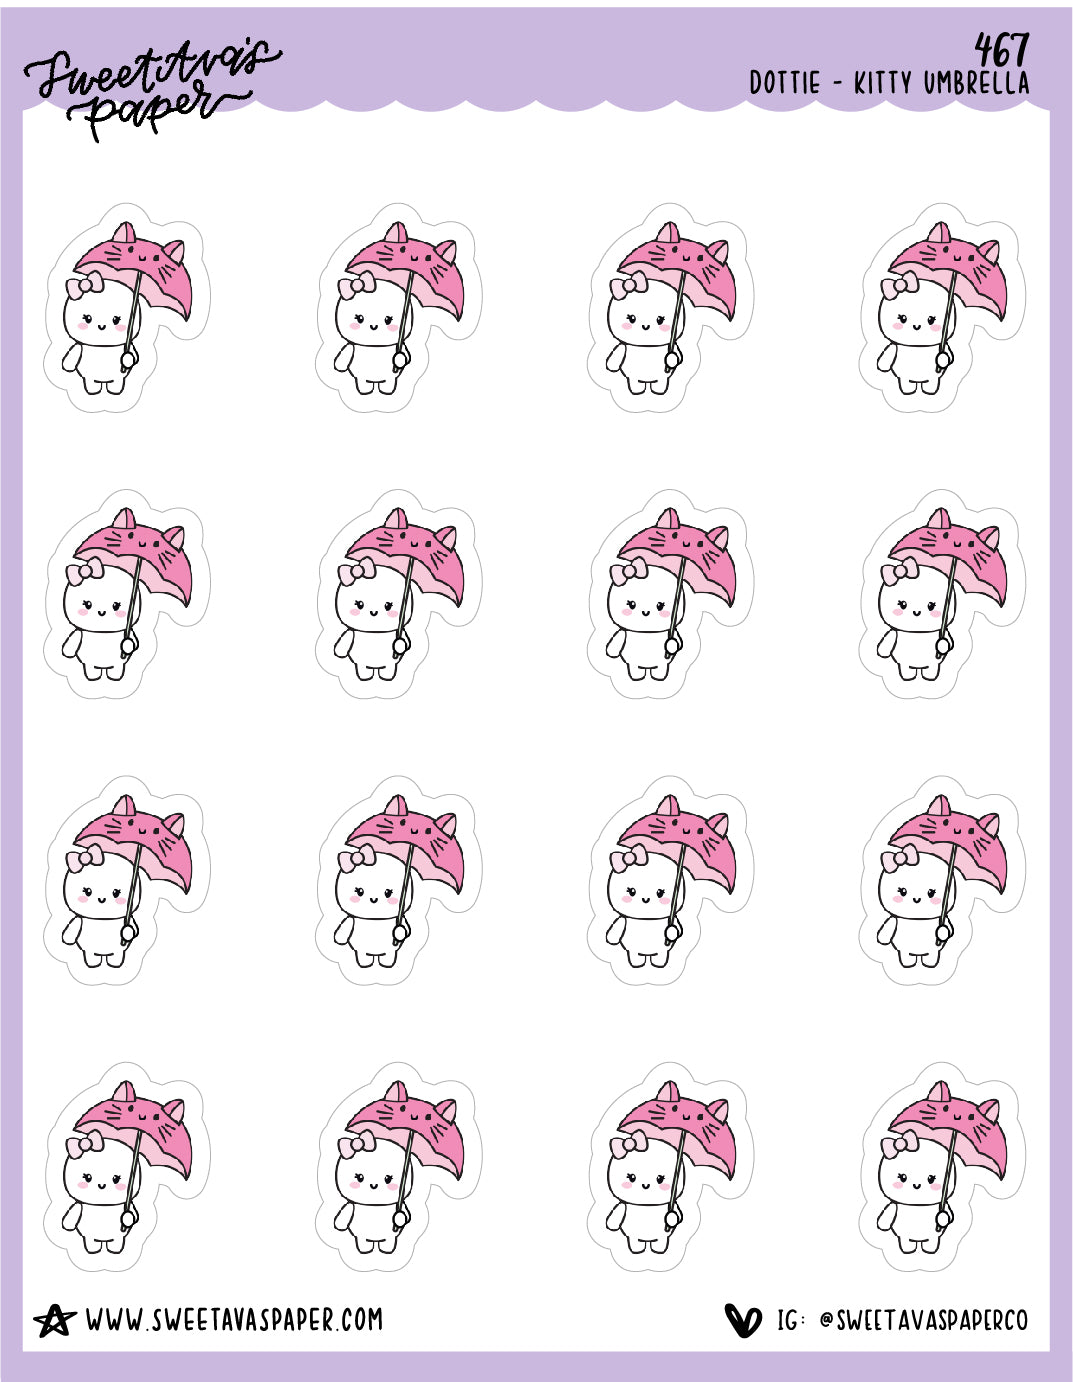 Kitty Umbrella Planner Stickers - Dottie The Sugar Bug - [467]